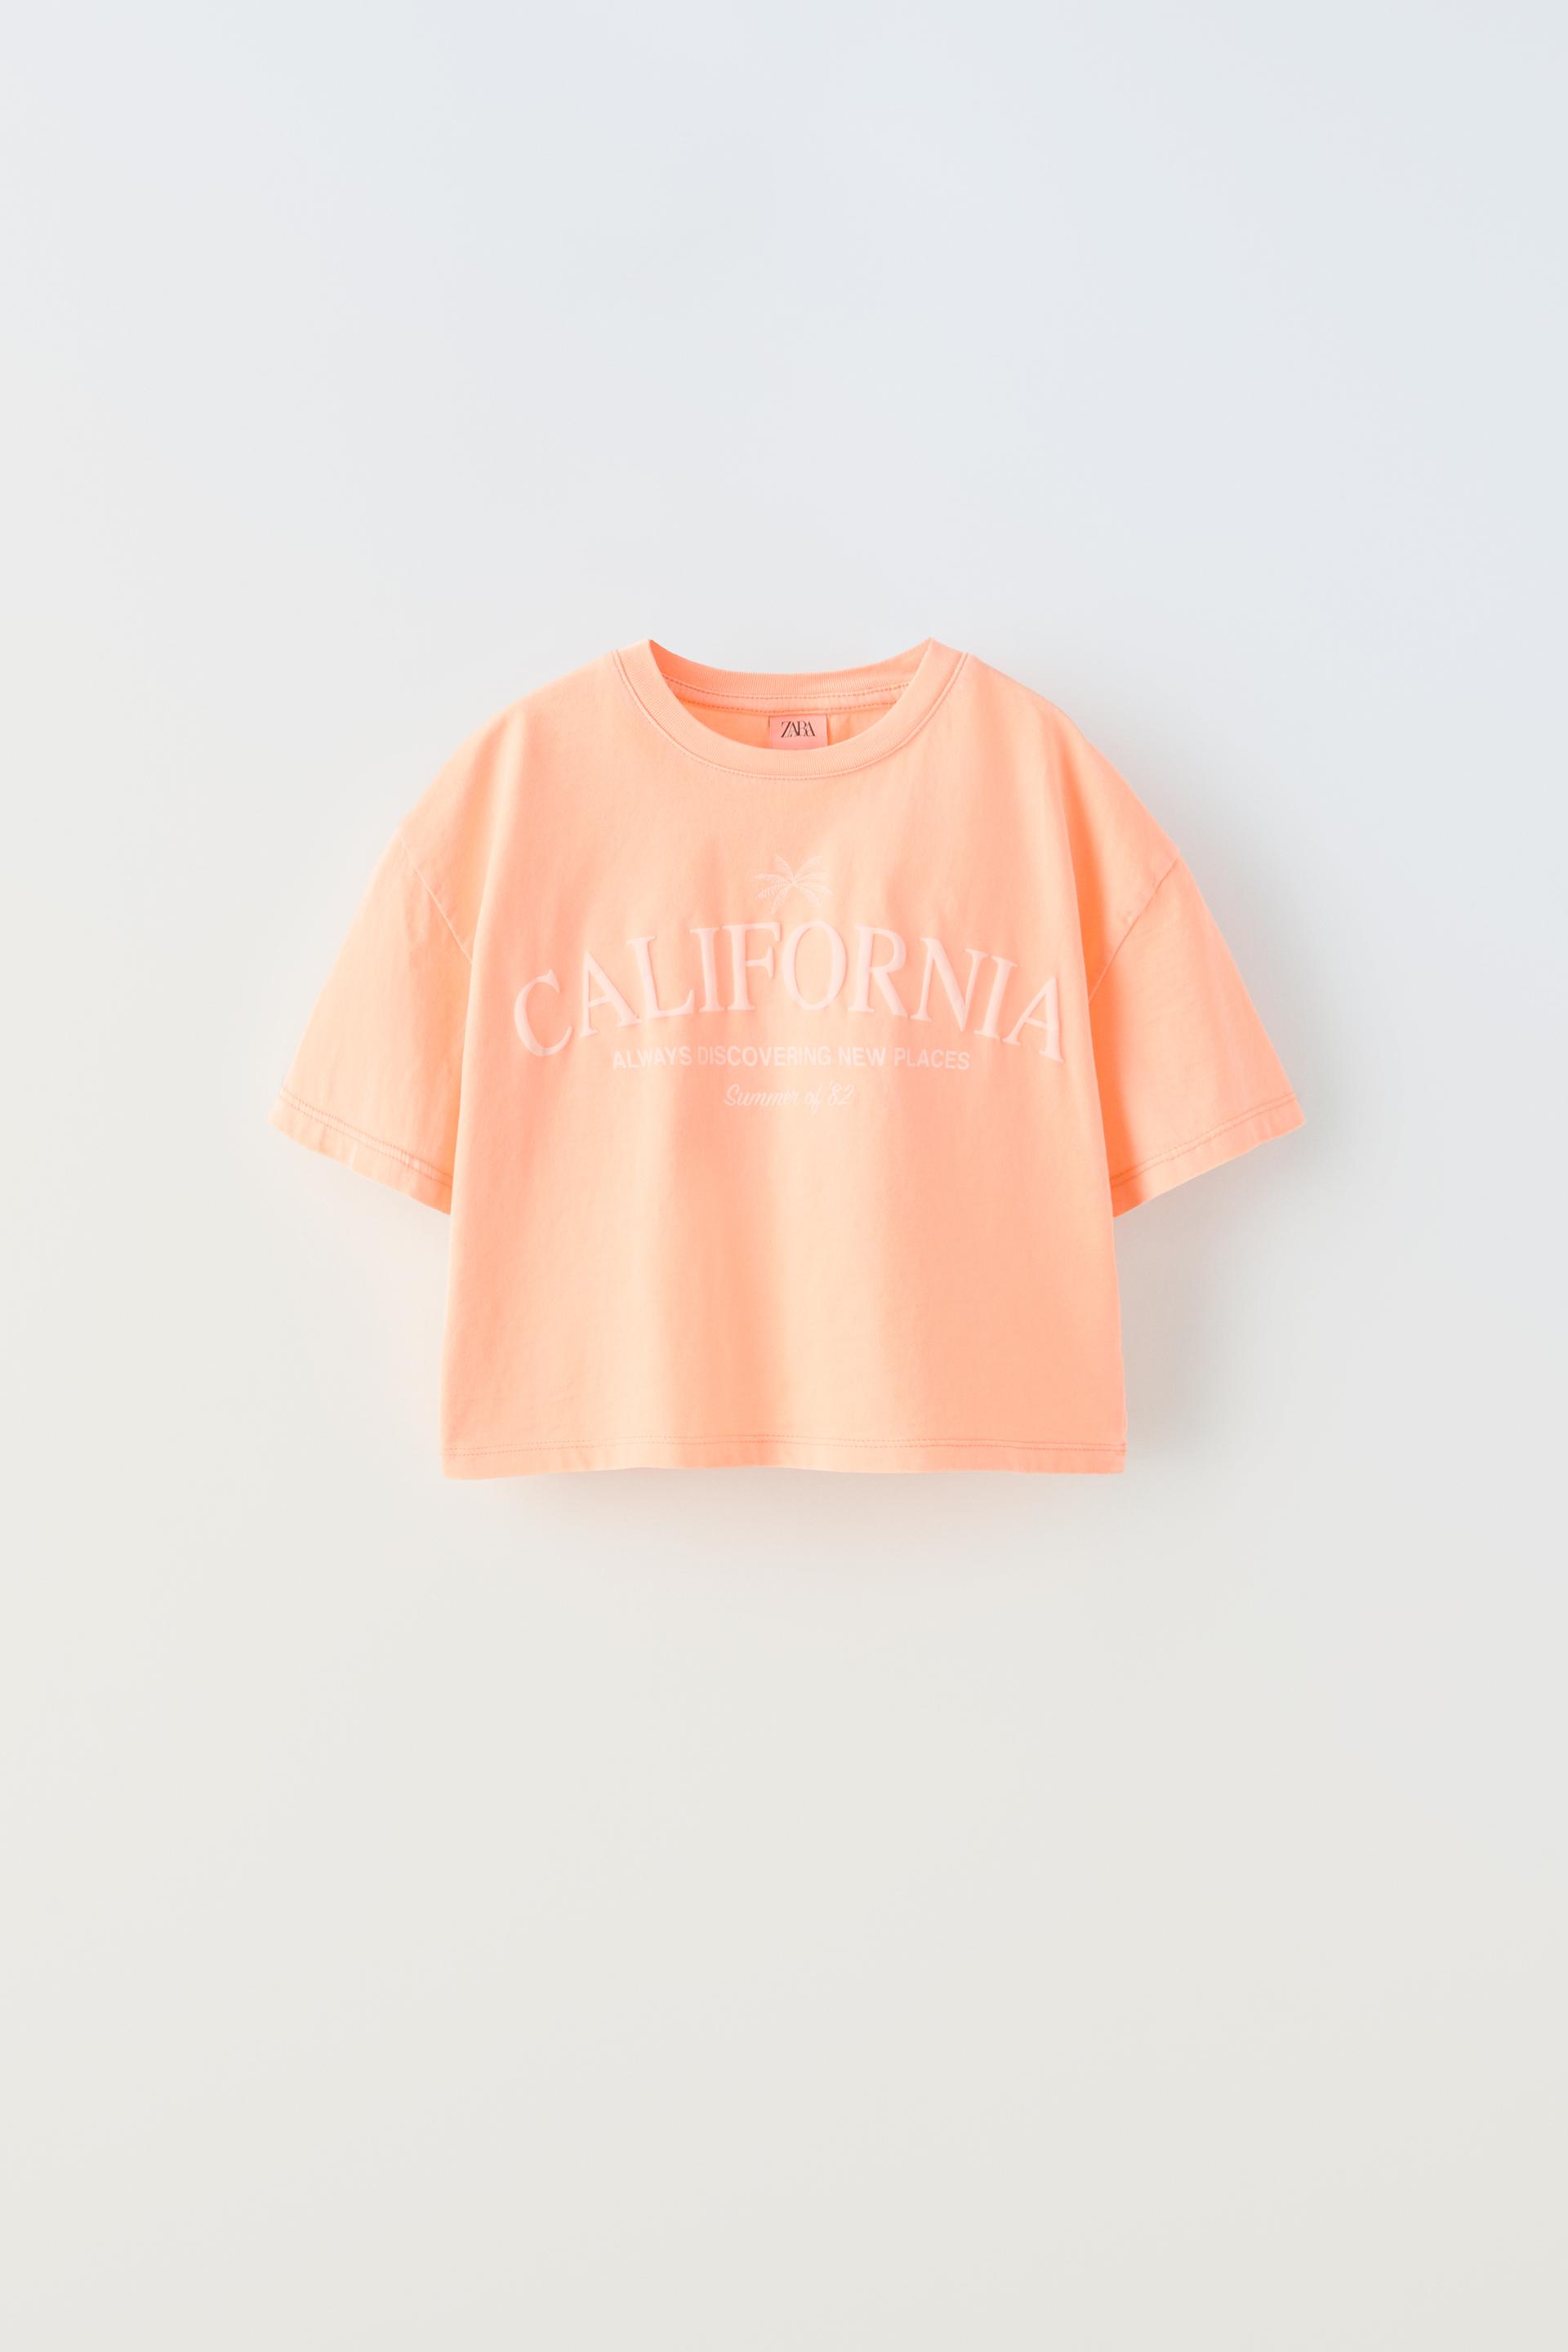 Футболка Zara Printed Raised Slogan, оранжевый футболка zara printed with knot светло оранжевый